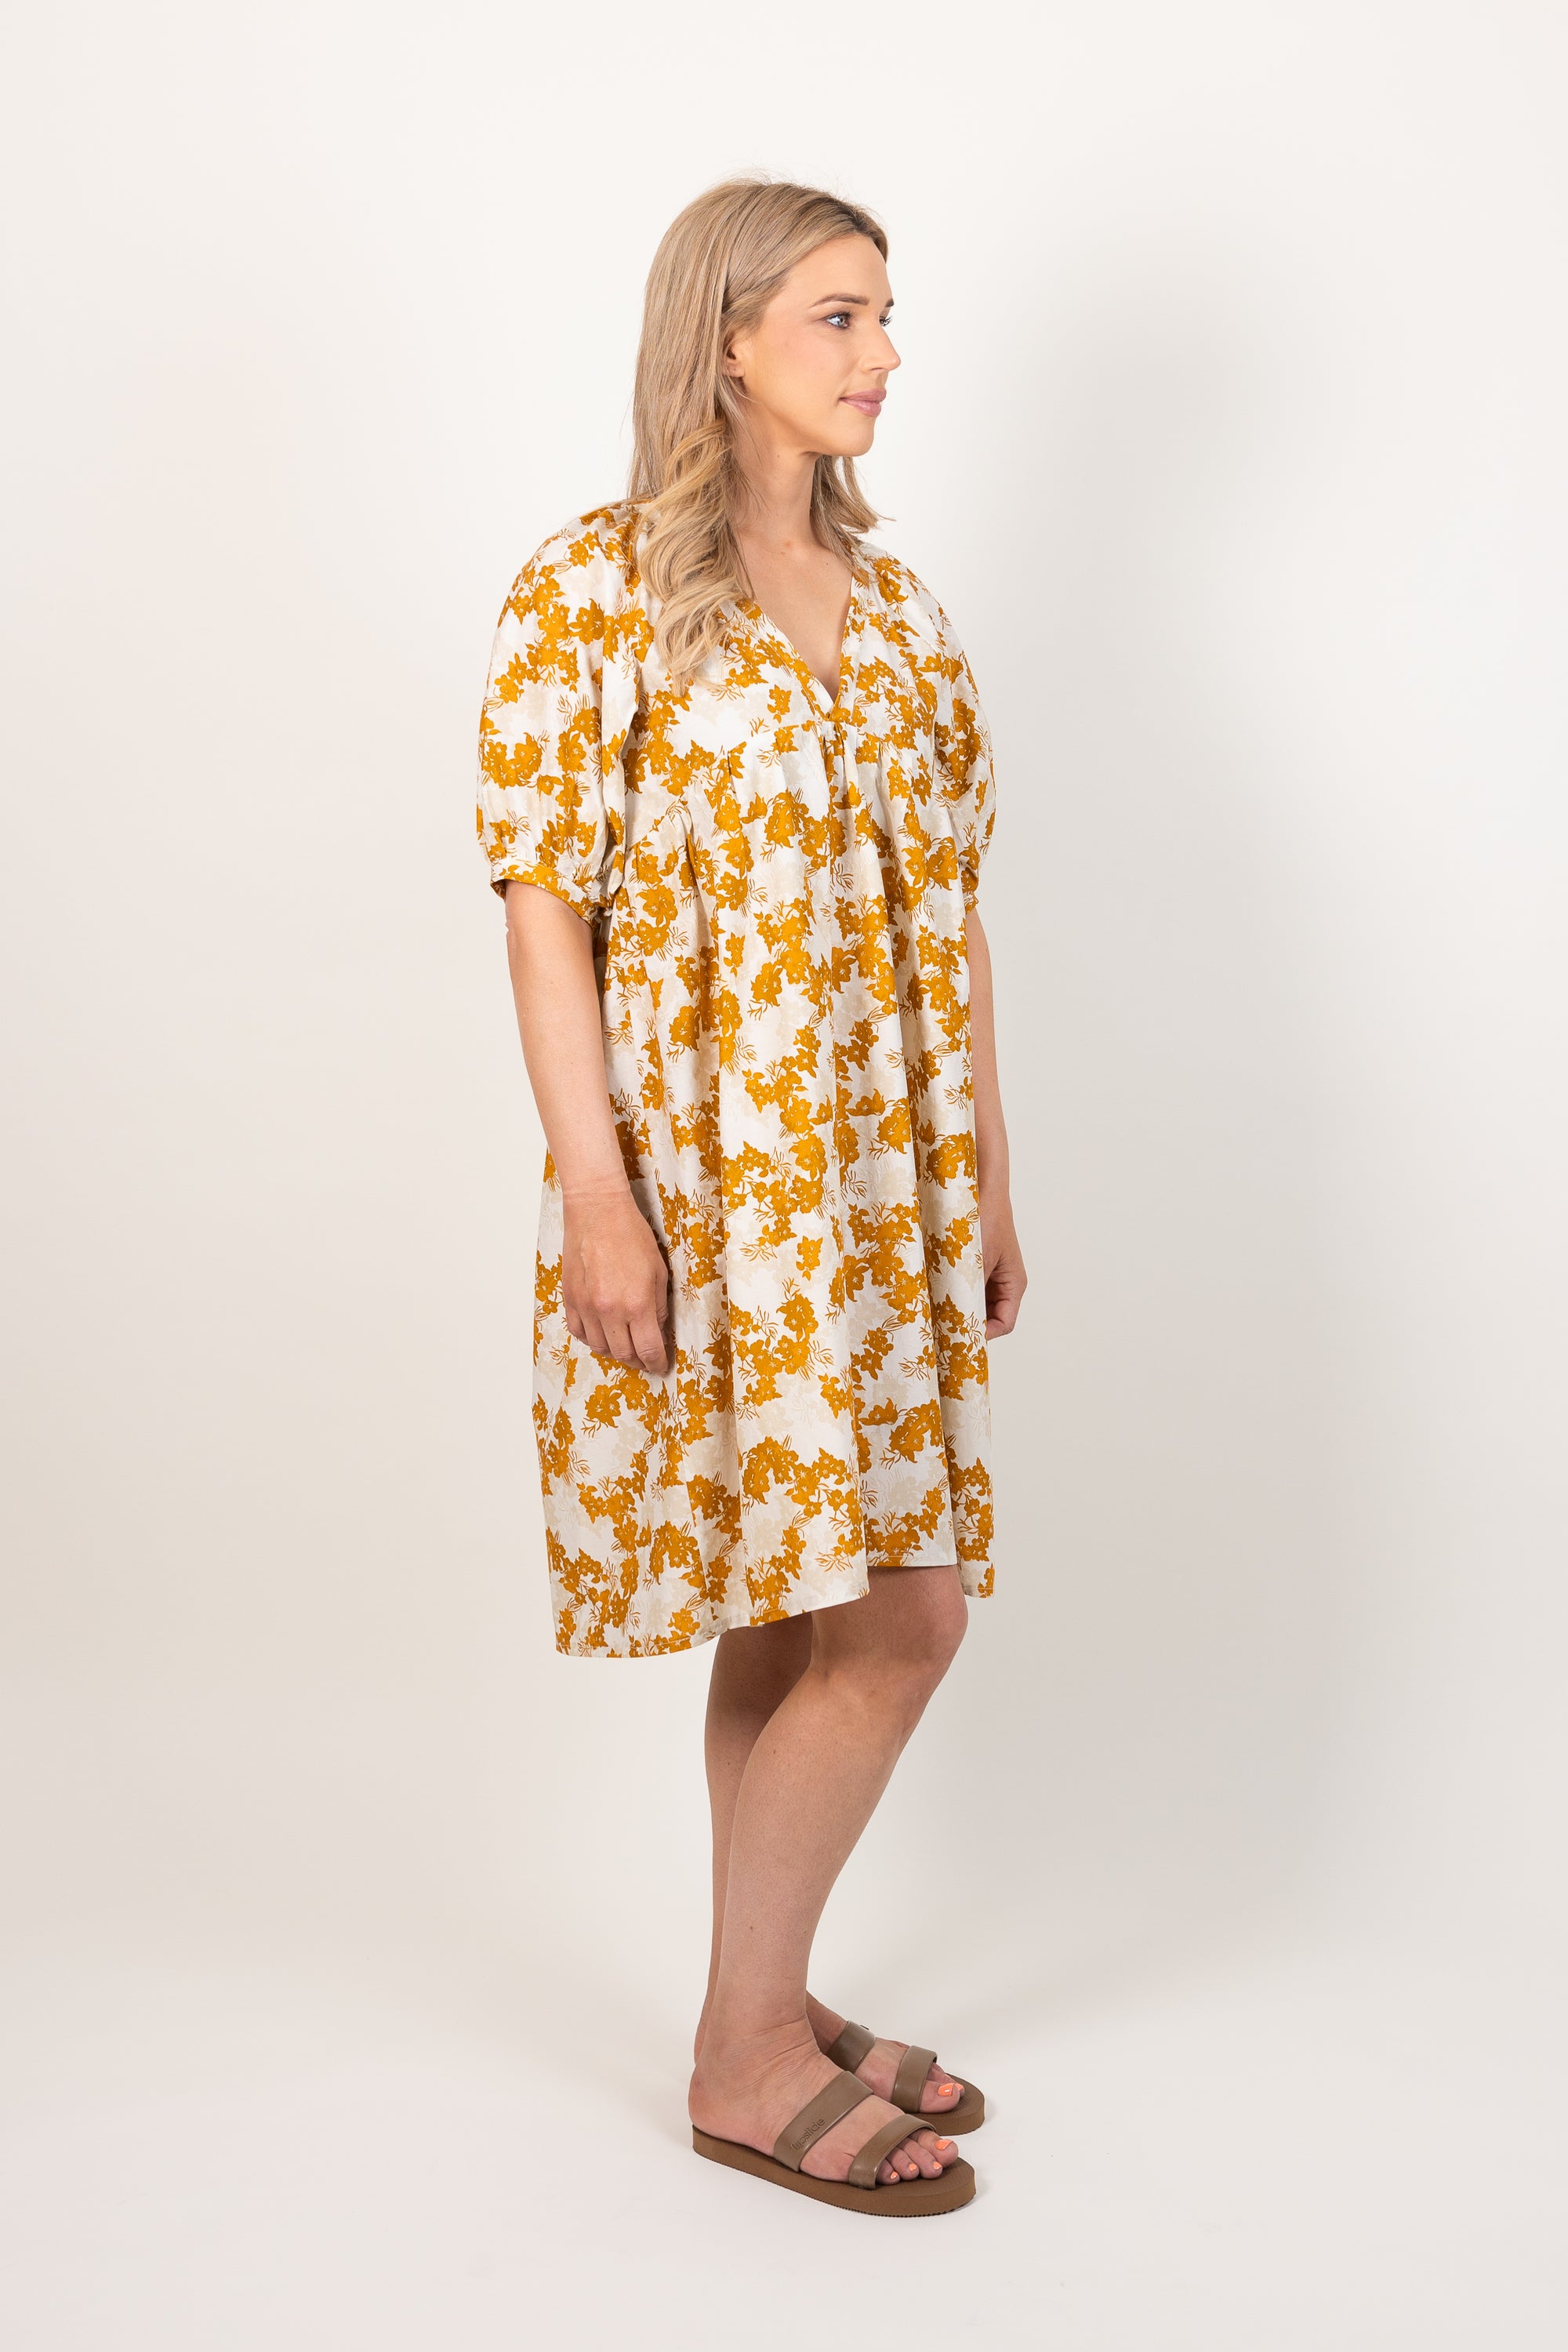 Ames Store Anna Dress Summer Cotton Floral Pattern